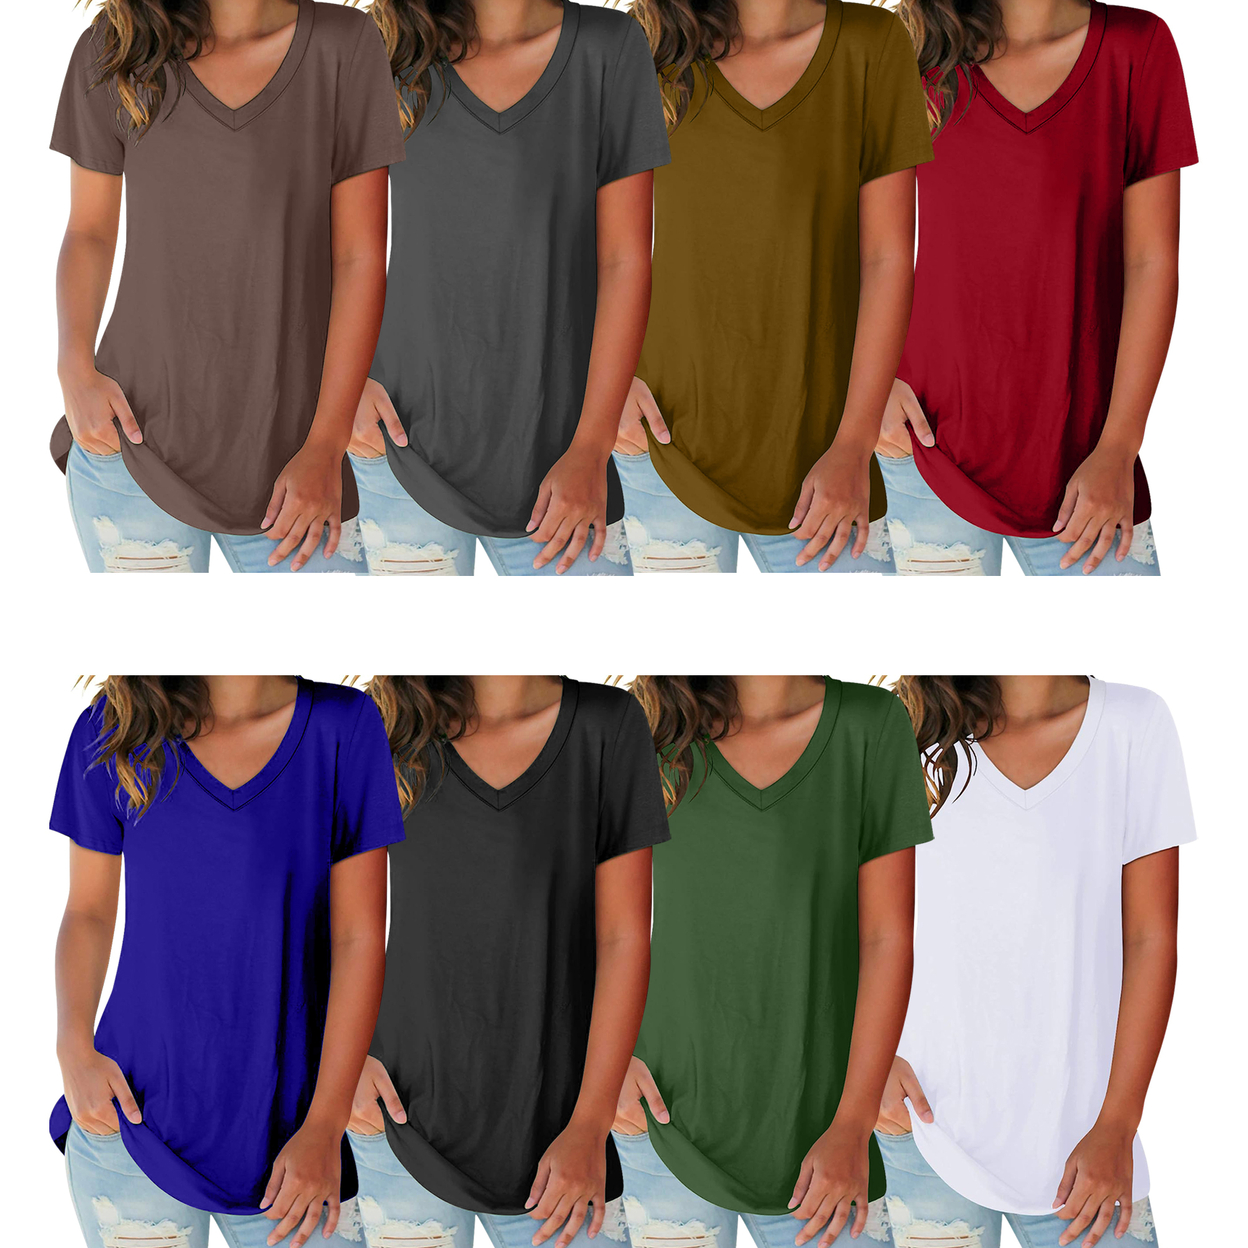 3-Pack: Women's Ultra Soft Smooth Cotton Blend Basic V-Neck Short Sleeve Shirts - Black, Grey, Brown, X-large